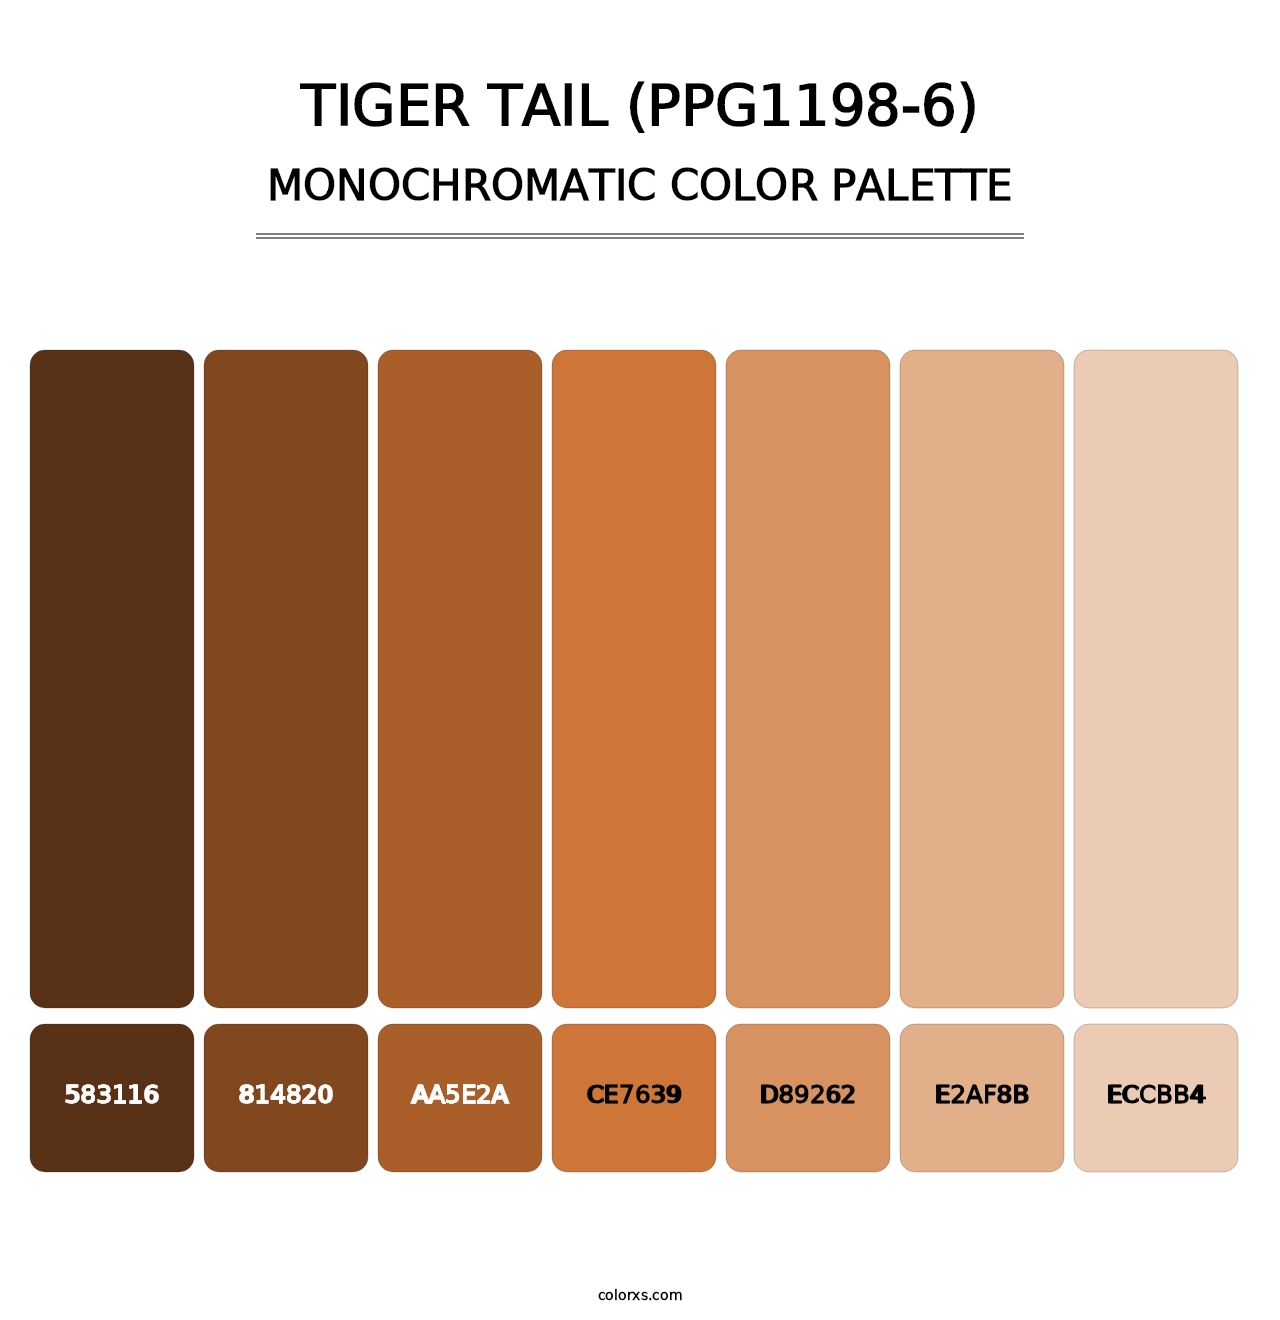 Tiger Tail (PPG1198-6) - Monochromatic Color Palette